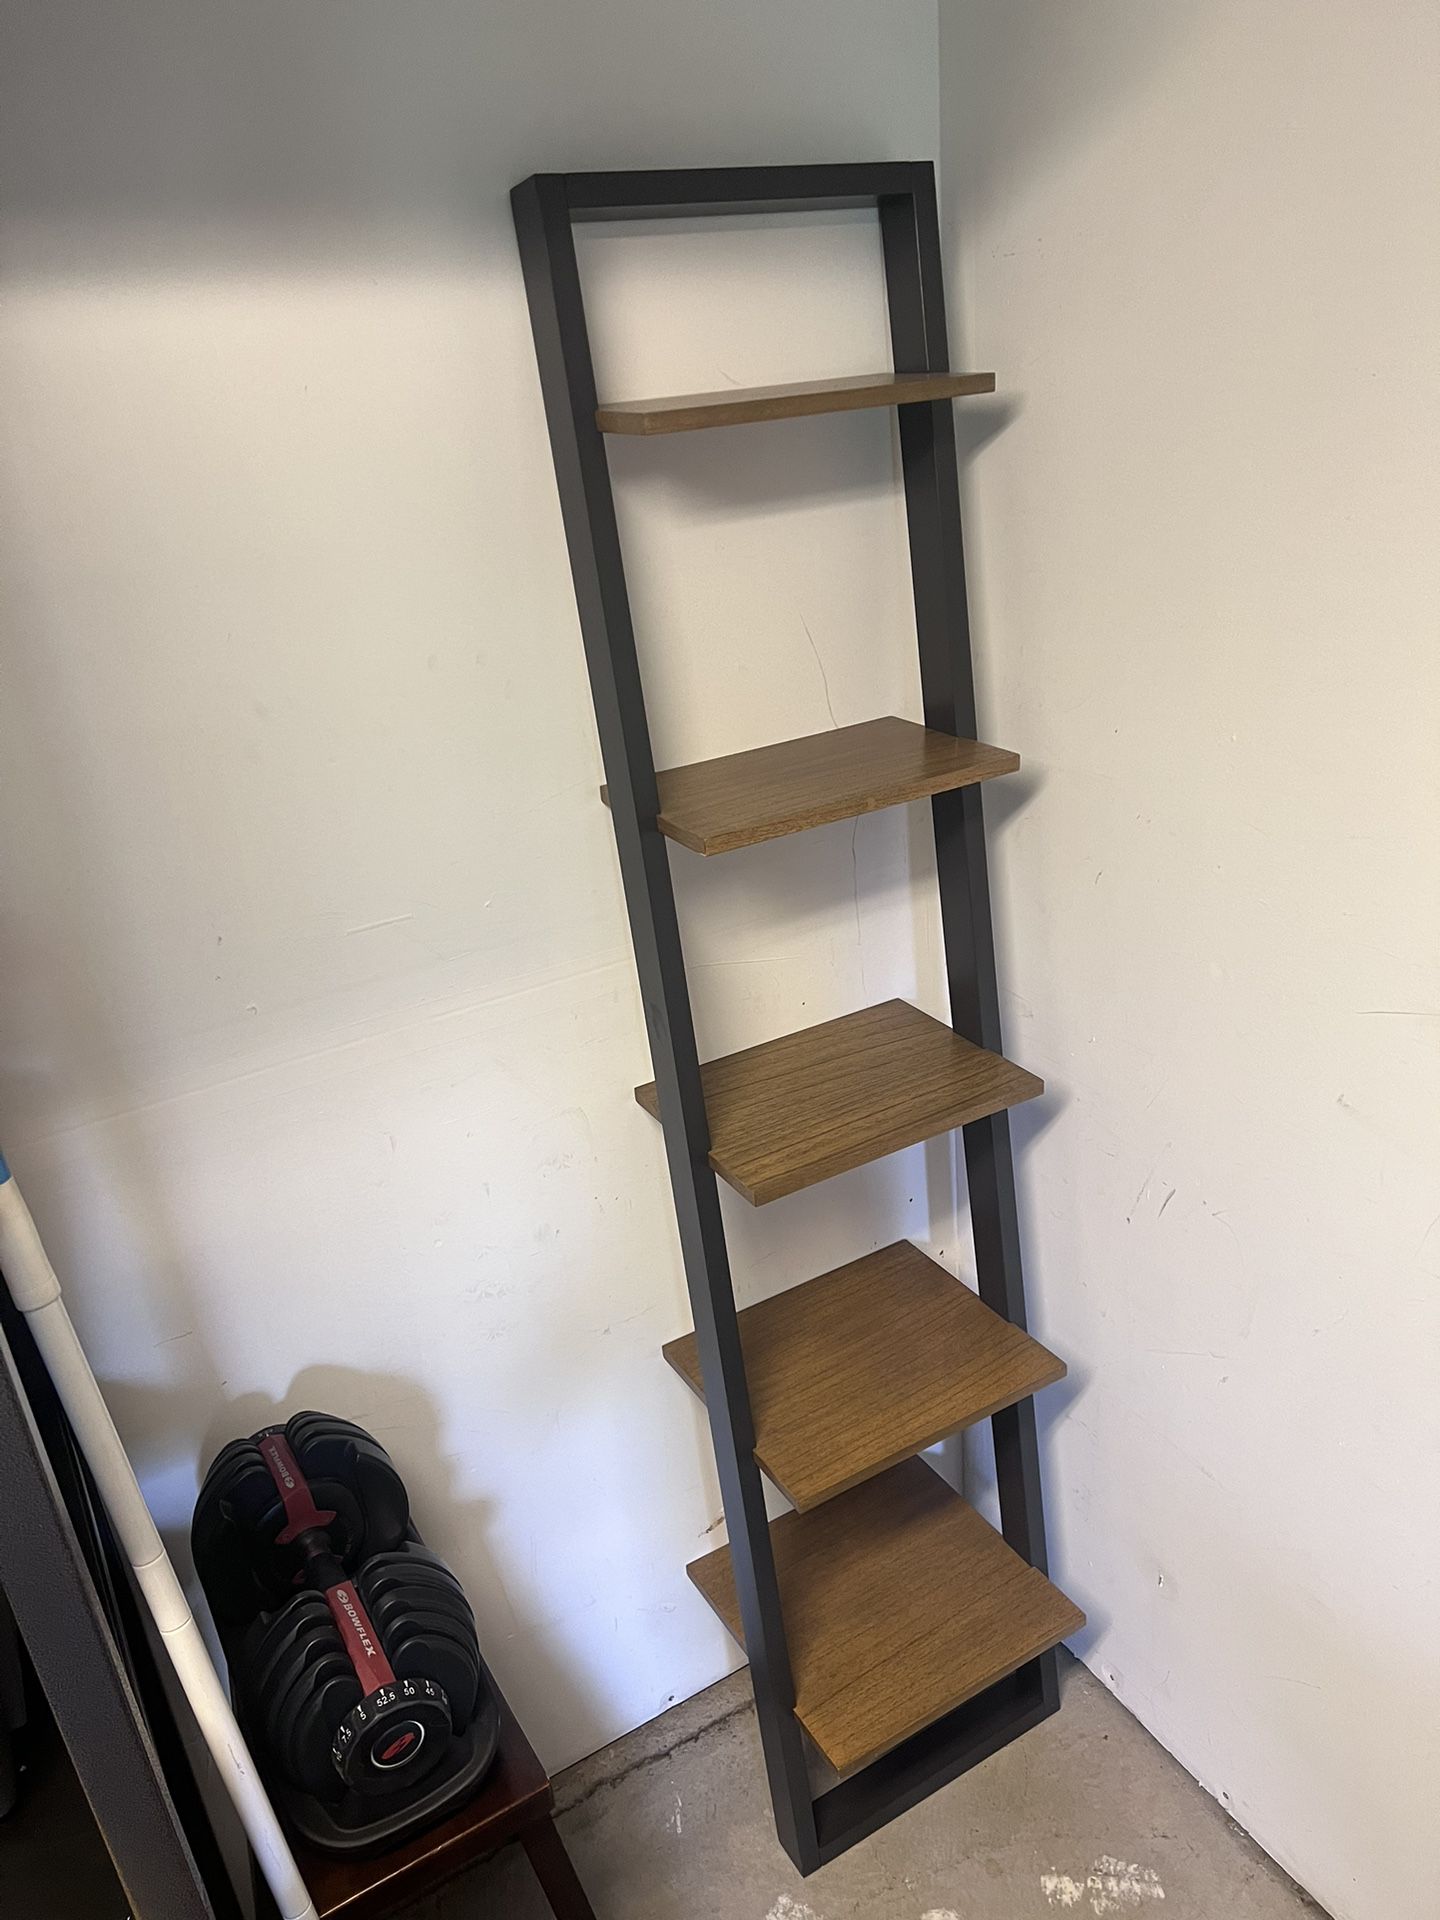 West Elm Ladder Shelf